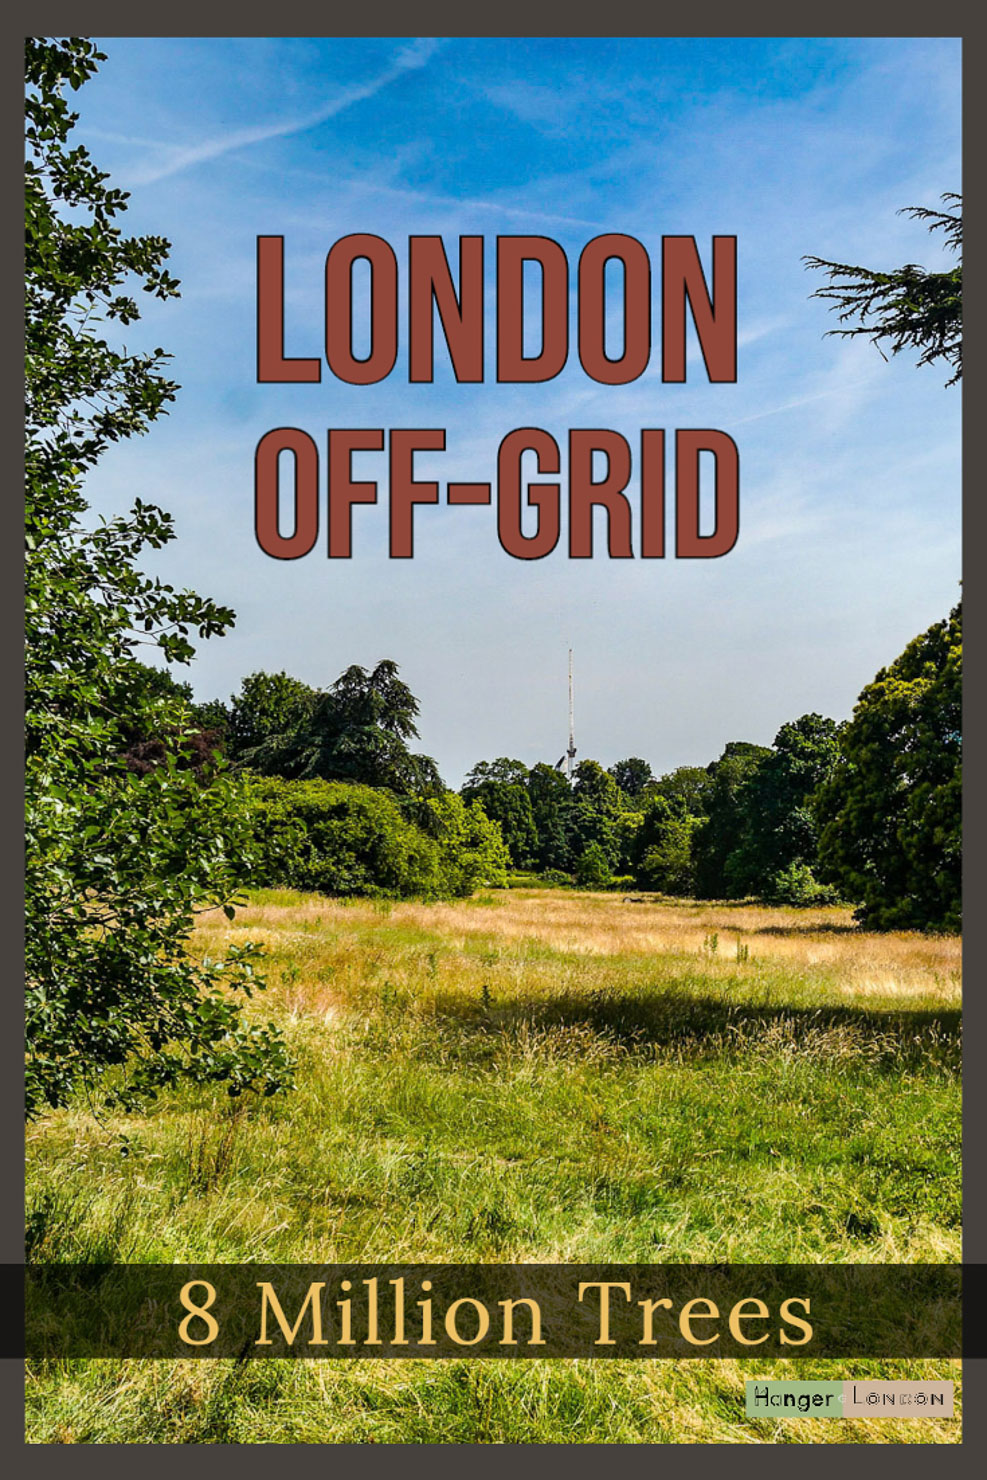 London off-grid